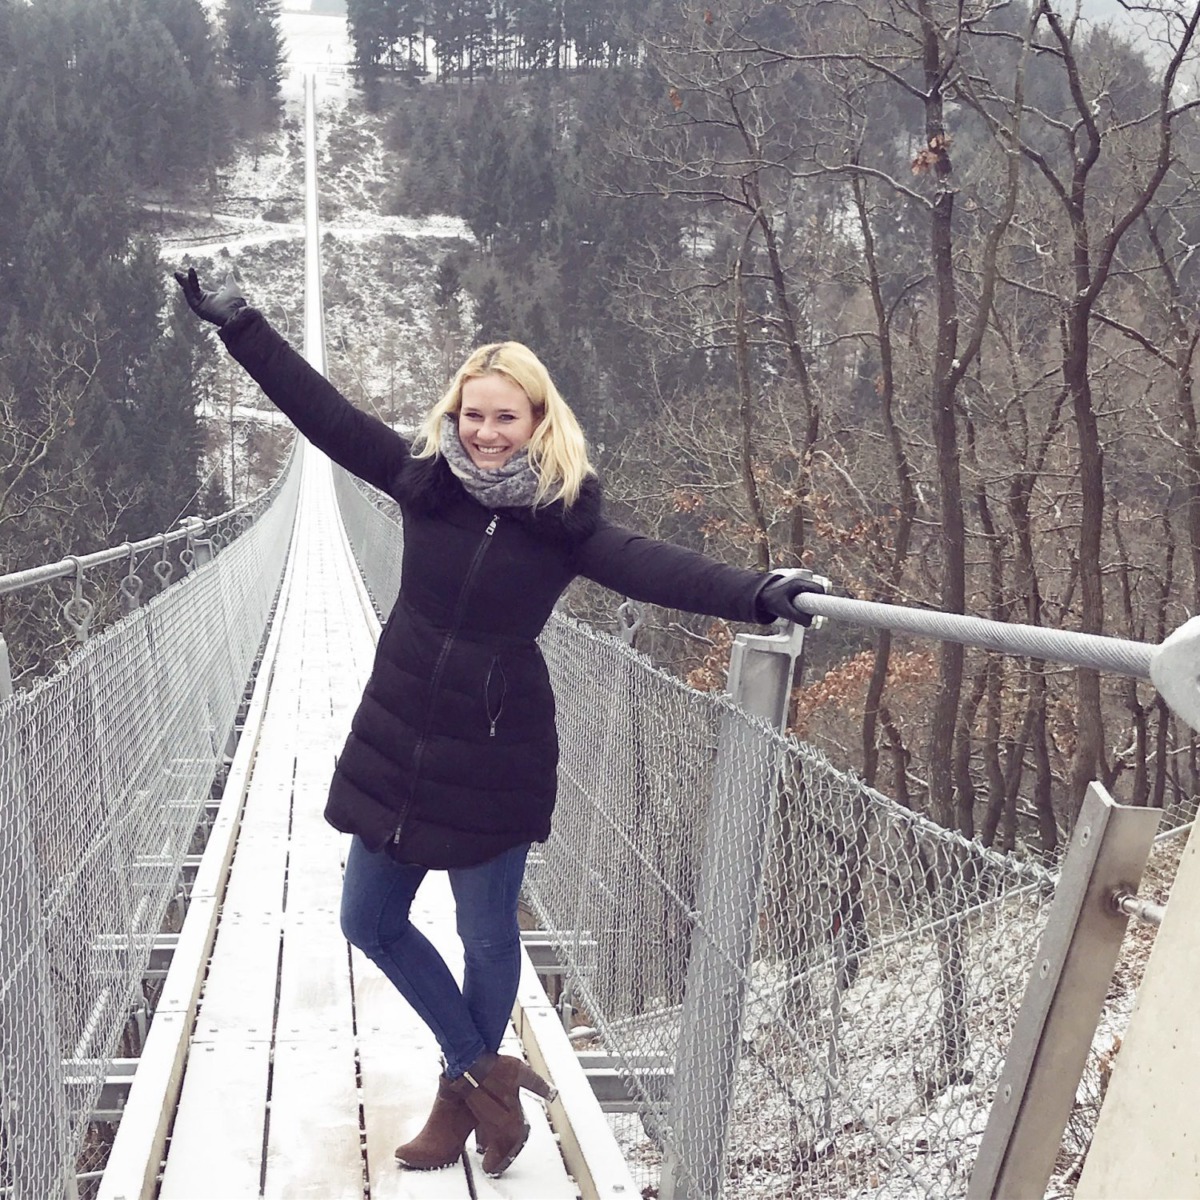 Passing Germany's longest Suspension Bridge: Geierlay - Be-sparkling